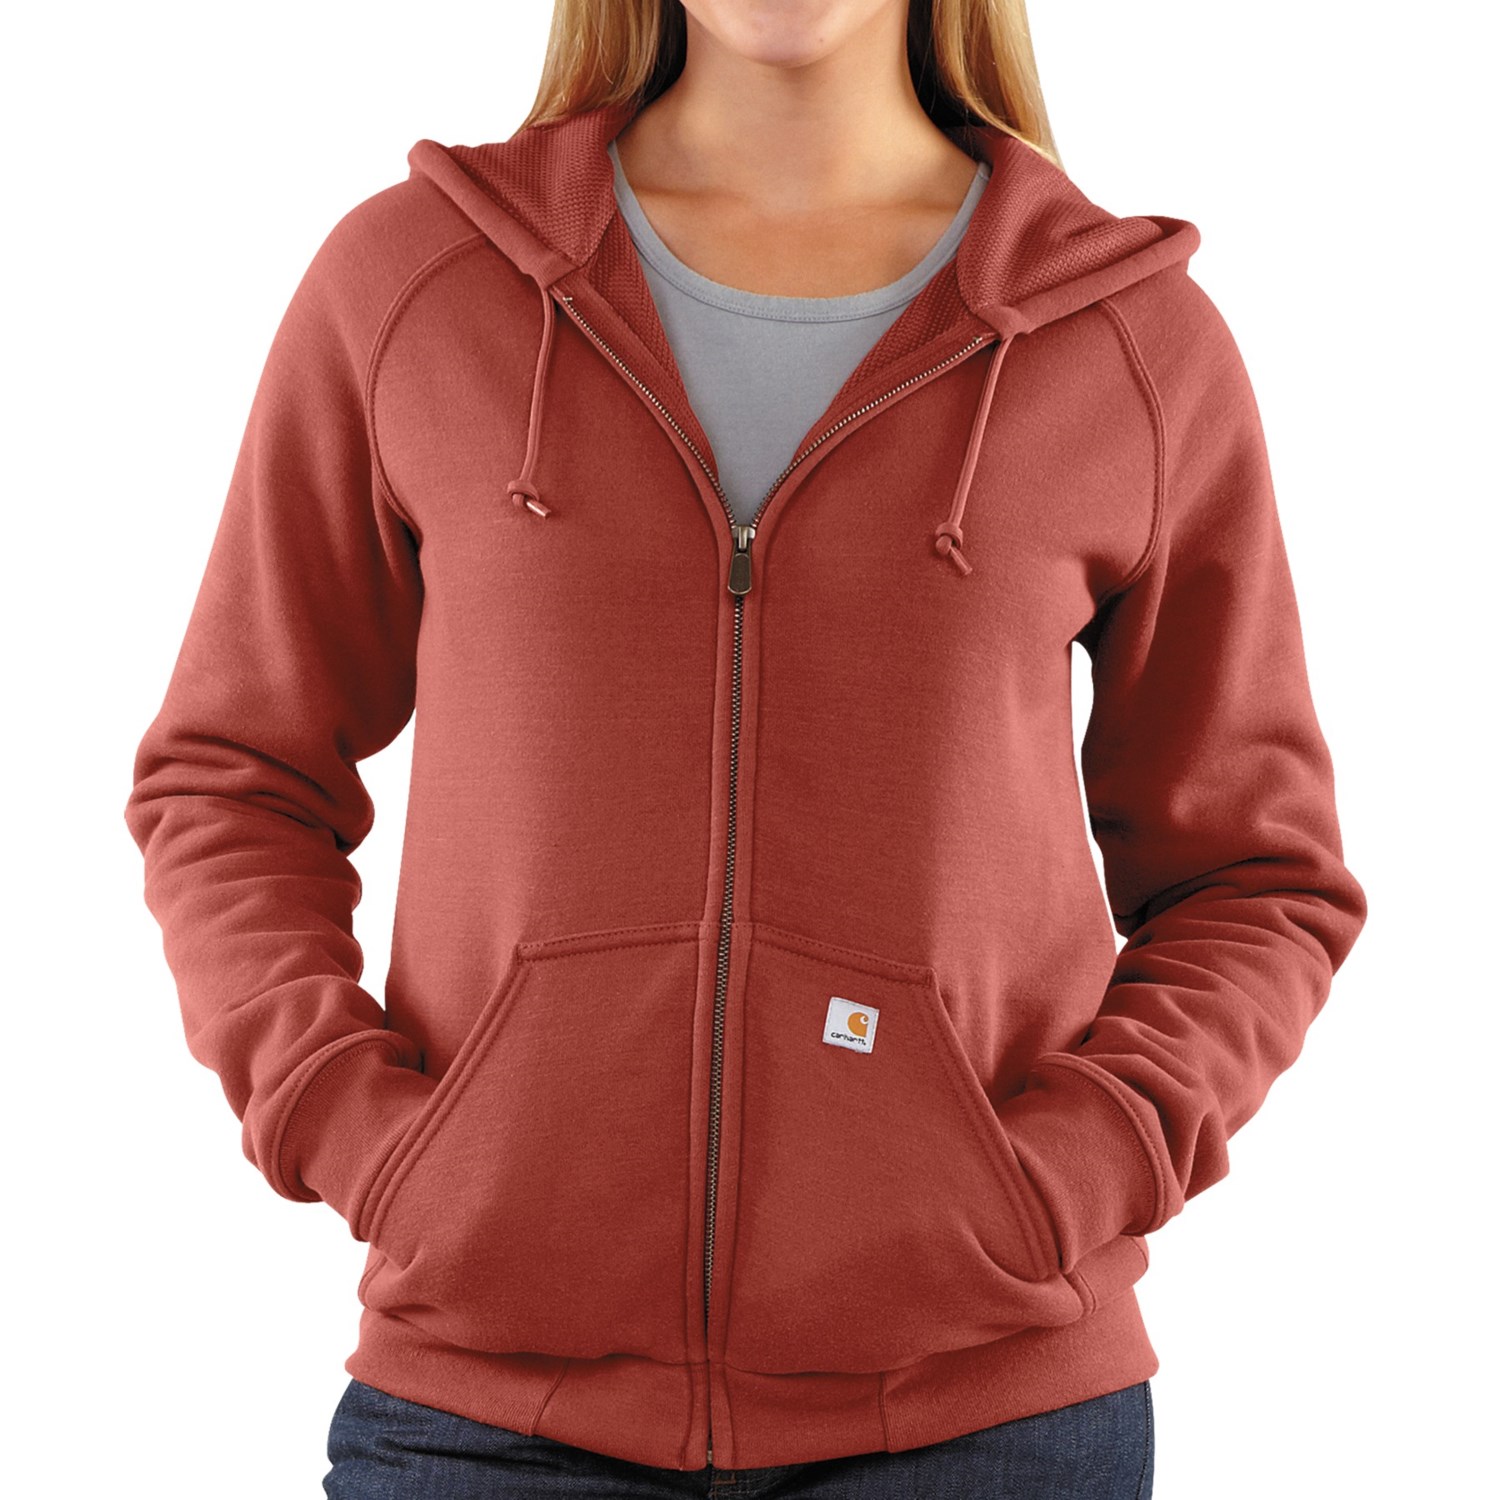 Carhartt Thermal Lined Sweatshirt (For Women) 3319G